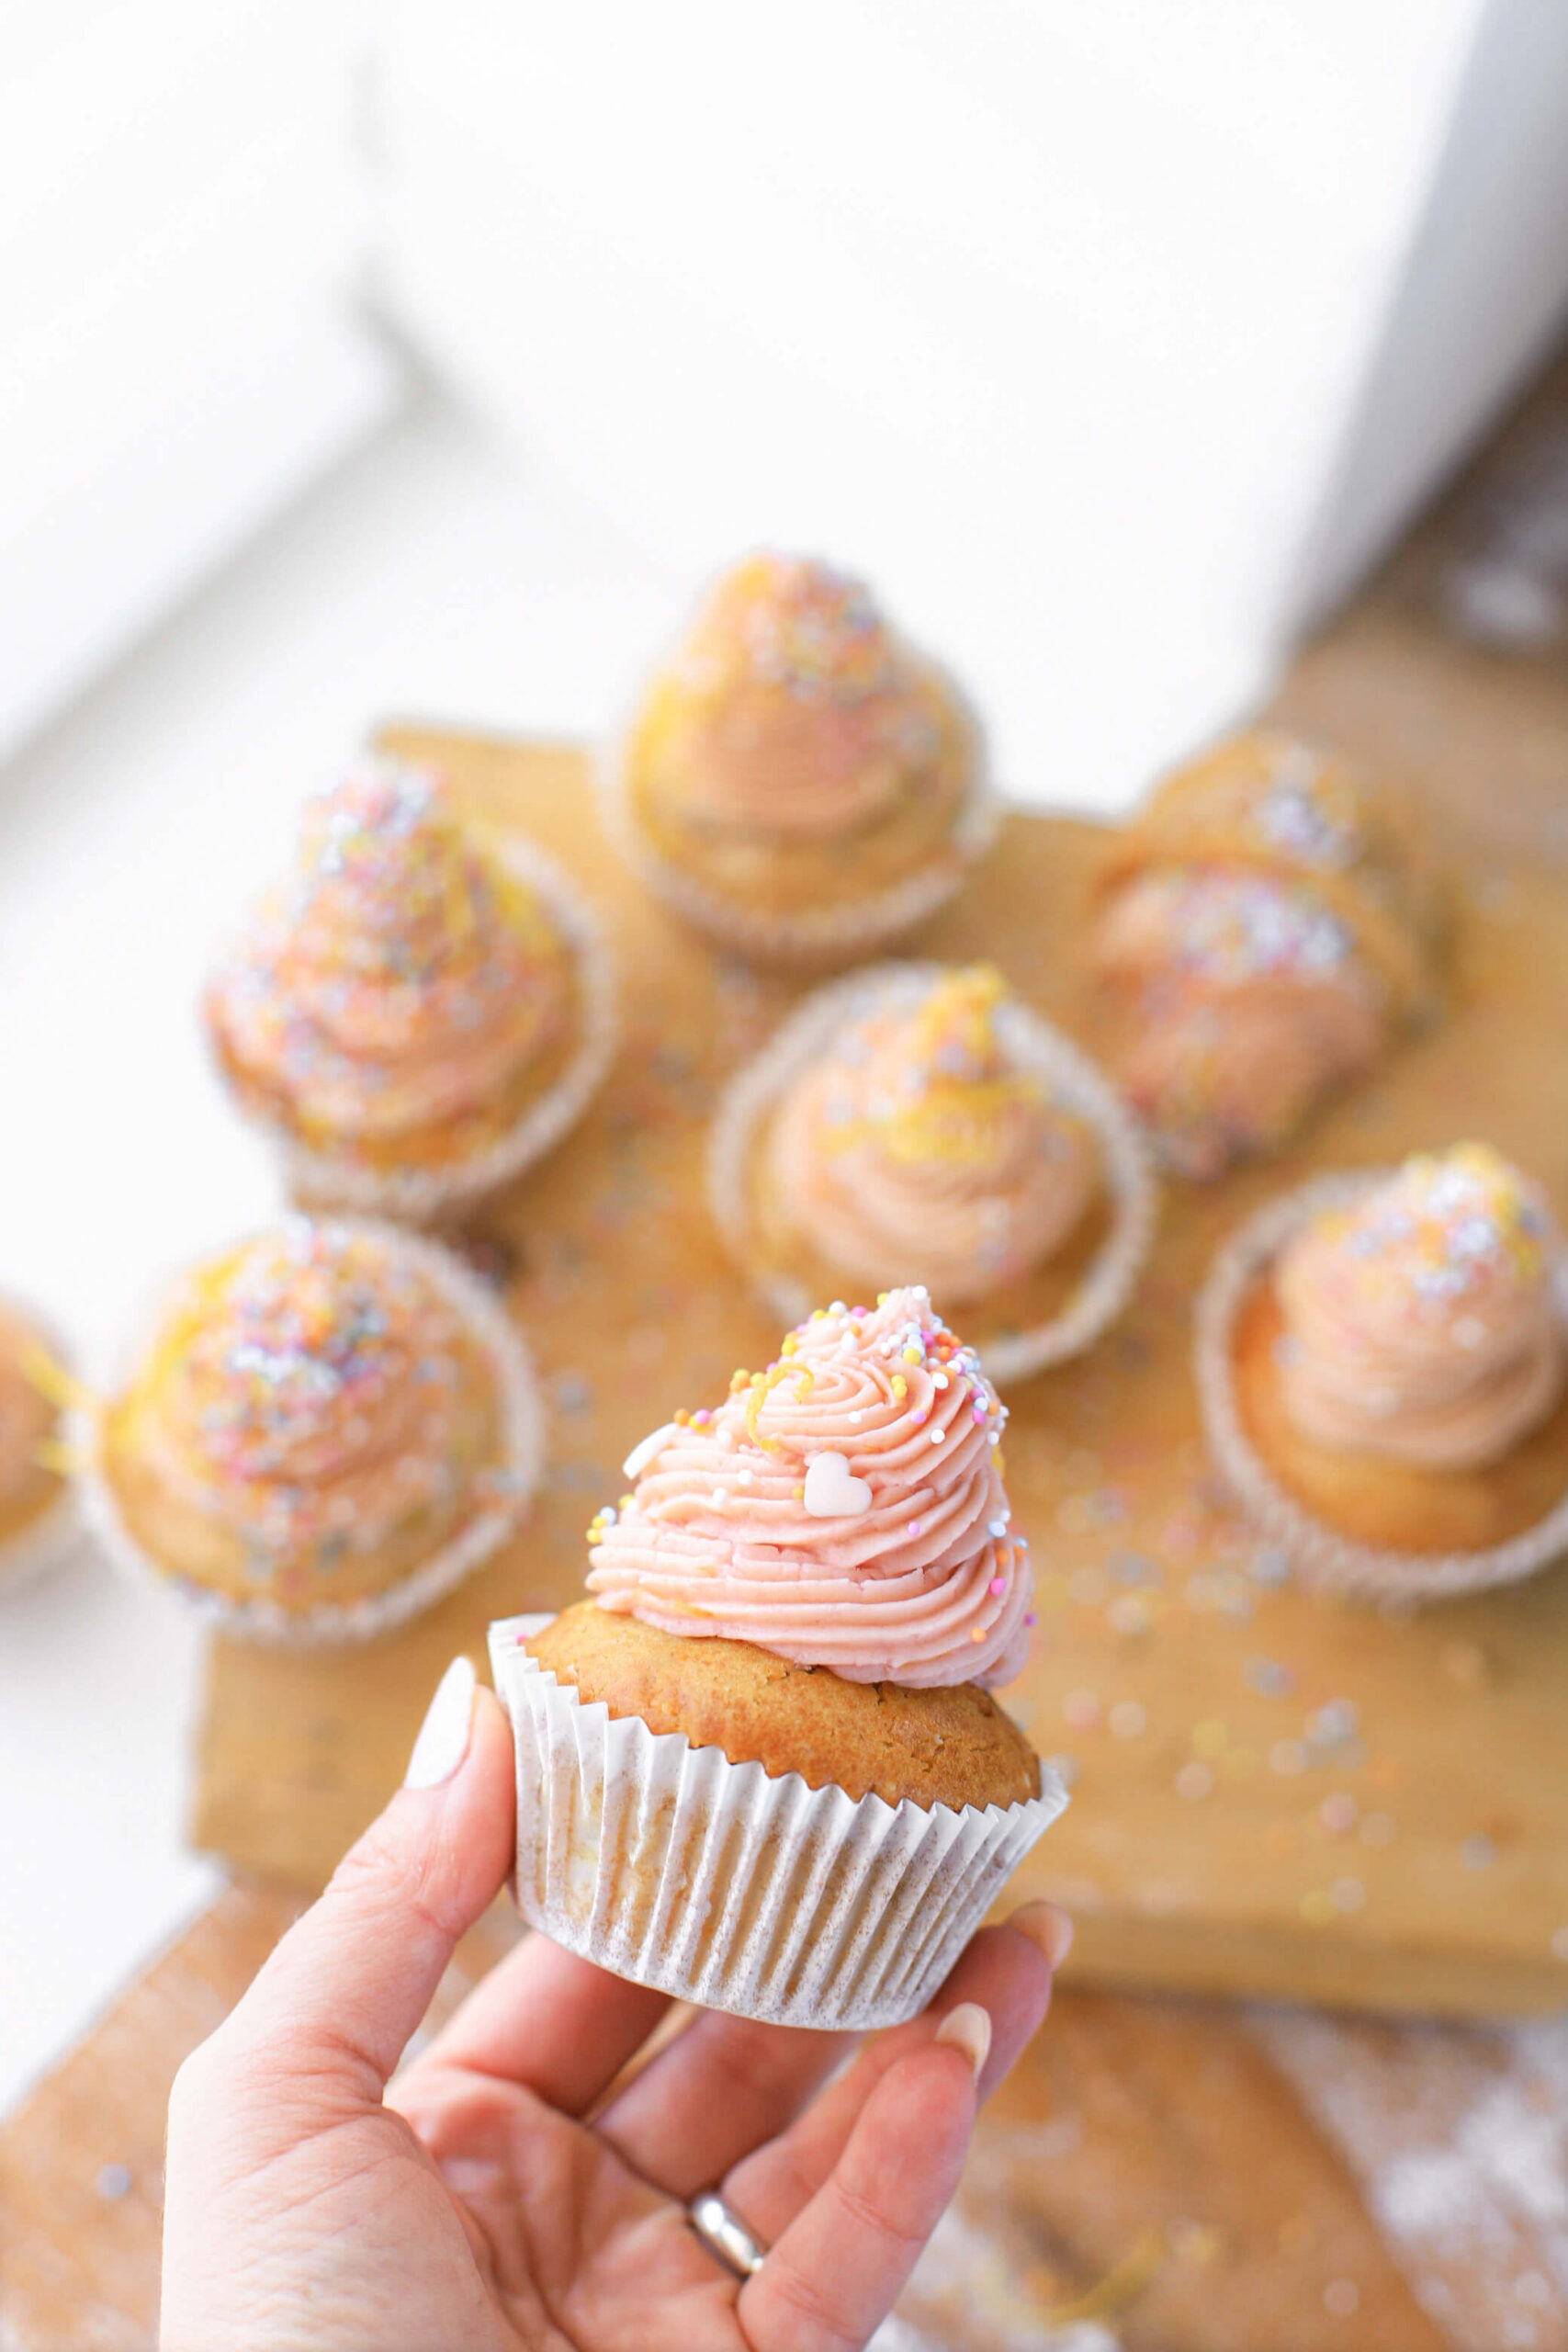 Beenmerg Hobart ironie Roze cupcakes met confetti & citroen VEGAN 'The Lemon Kitchen